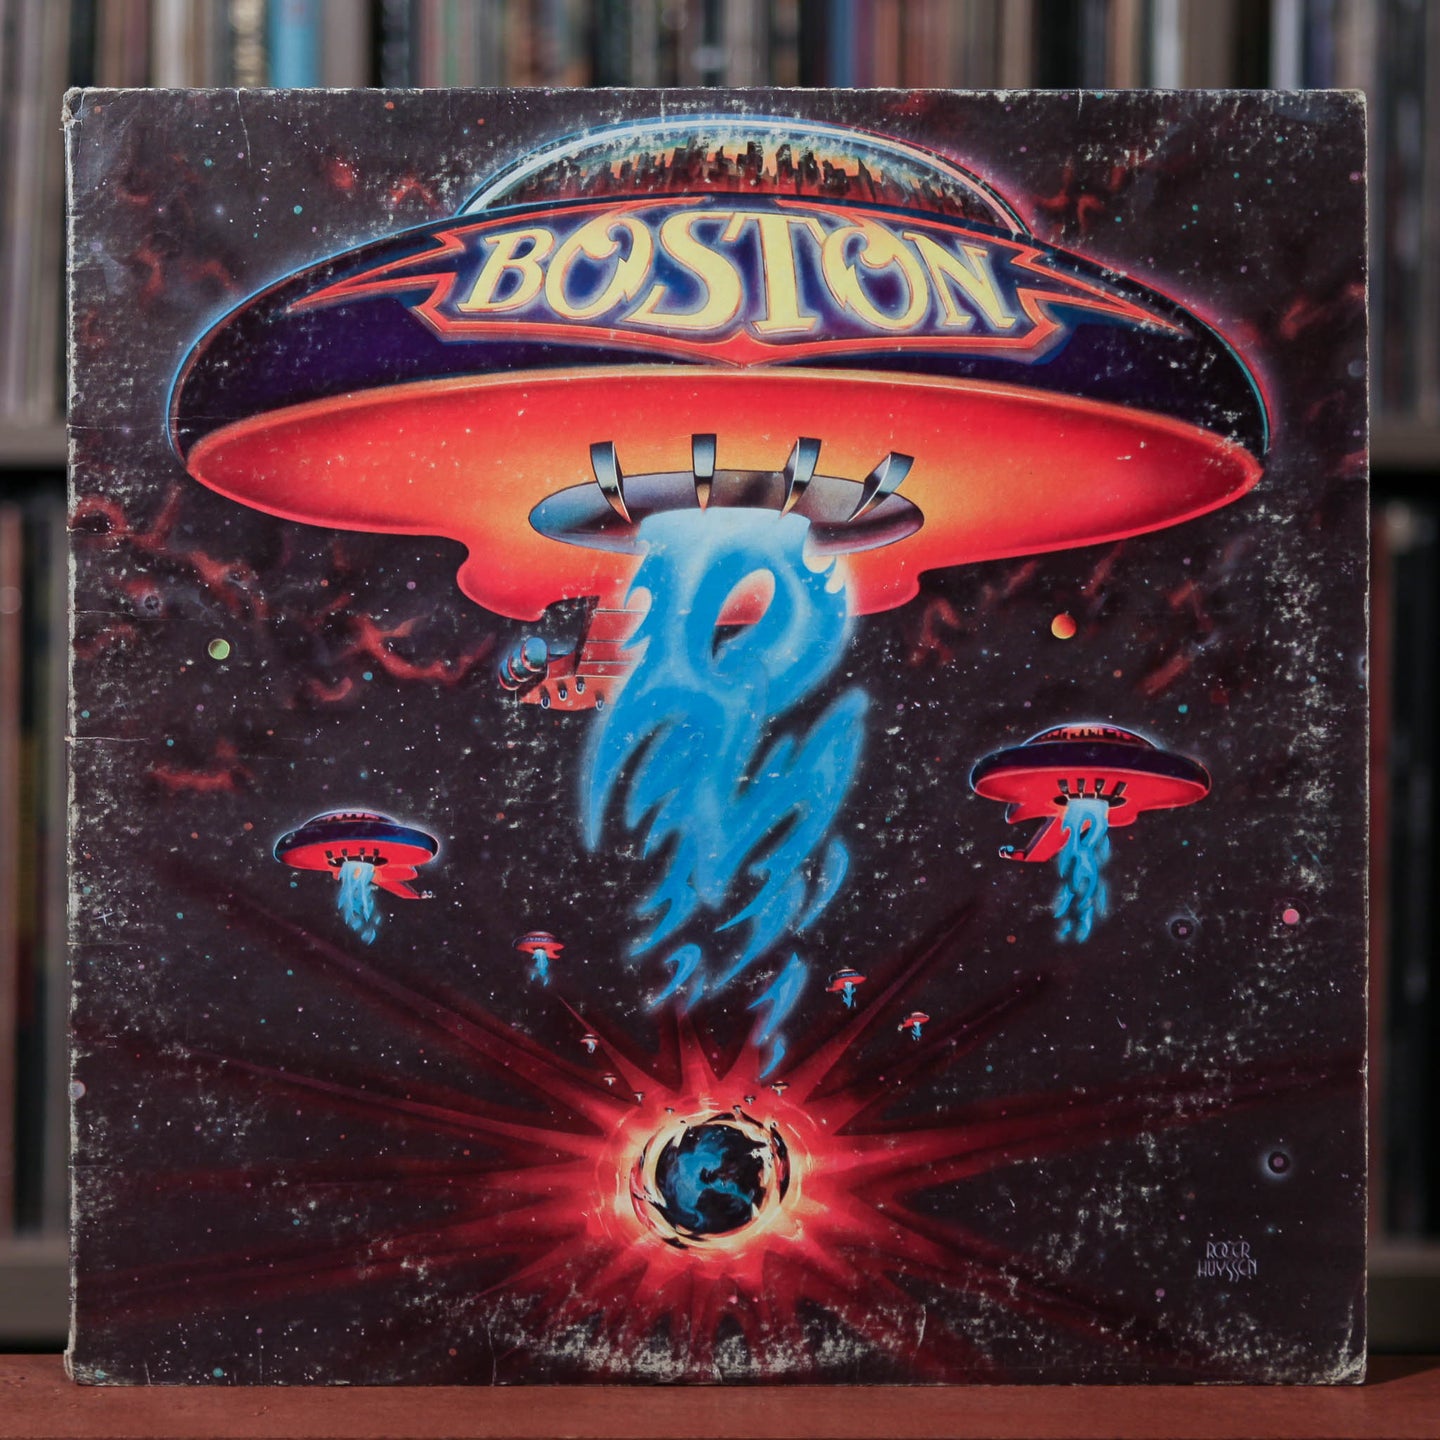 Boston - Self-Titled - 1976 Epic, VG/VG+